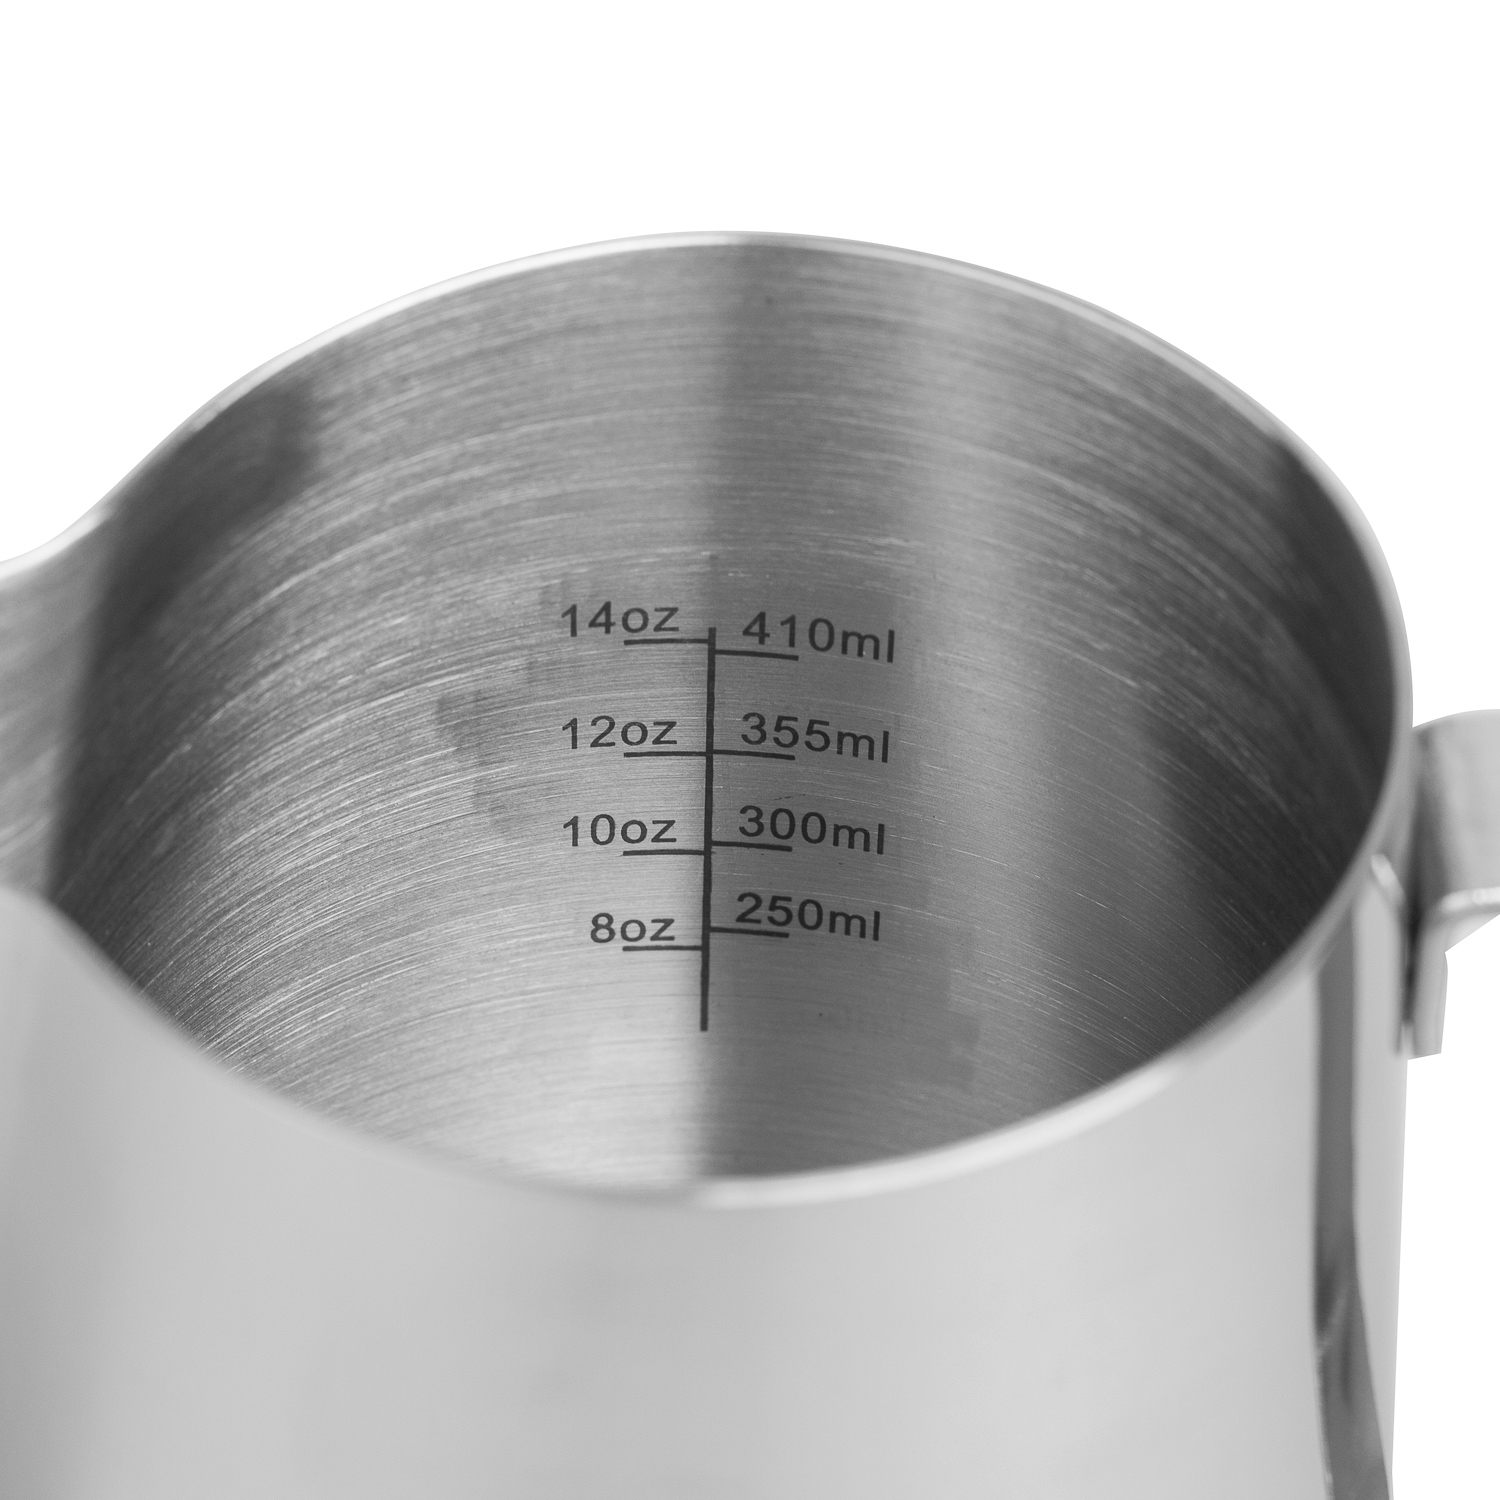 Milk jug stainless steel, Volume 300 ml